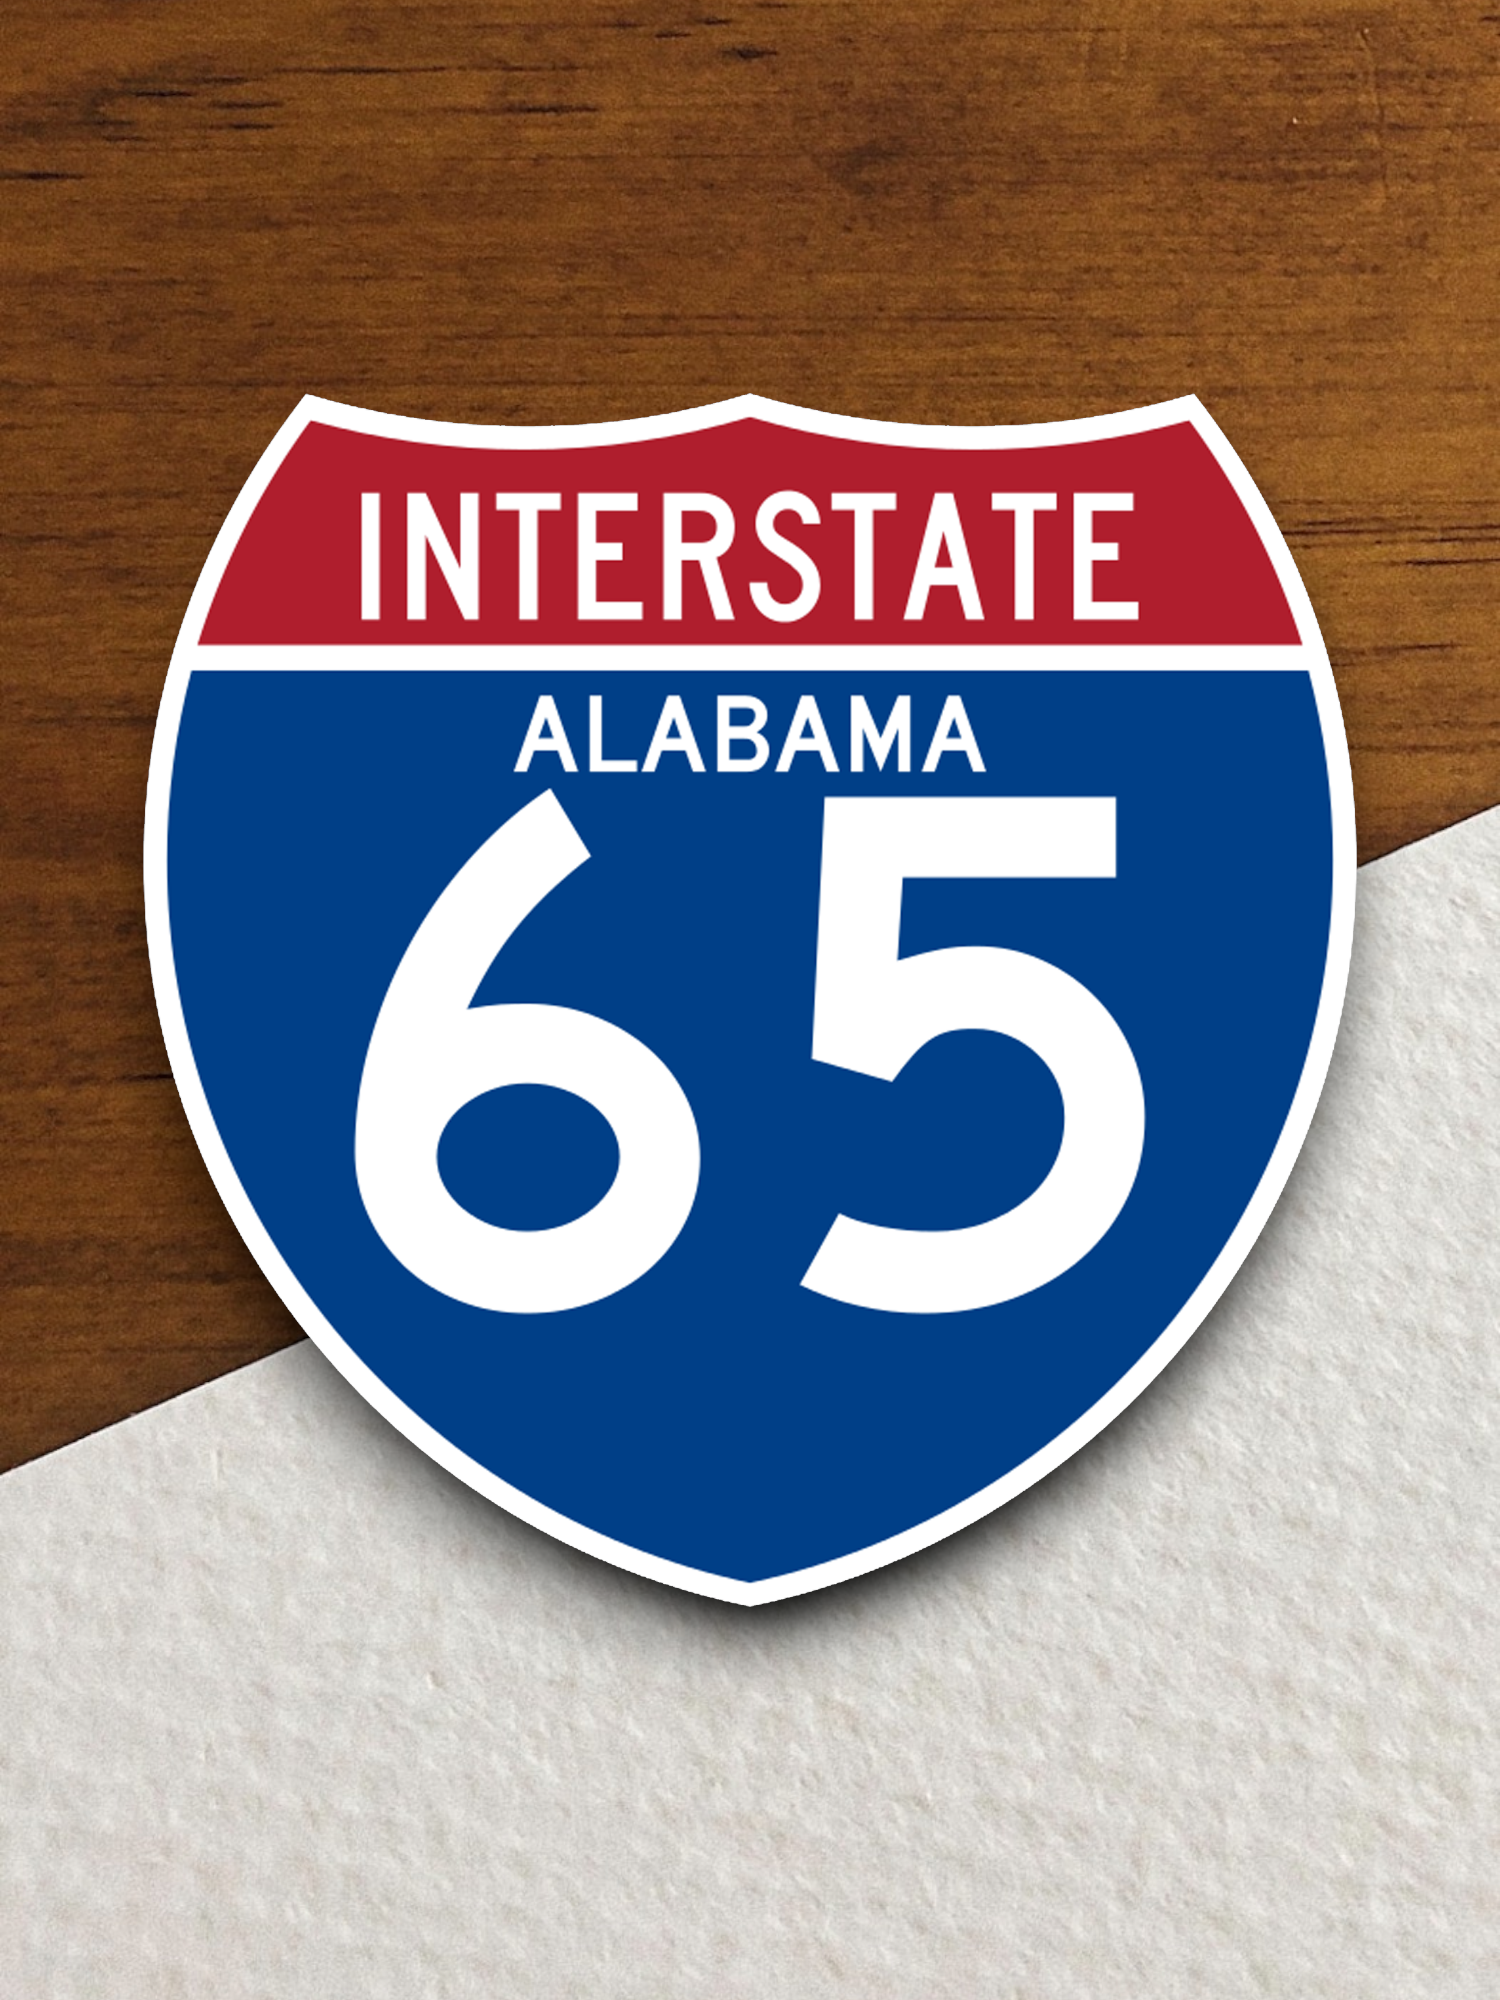 Interstate I-65 Alabama - Road Sign Sticker